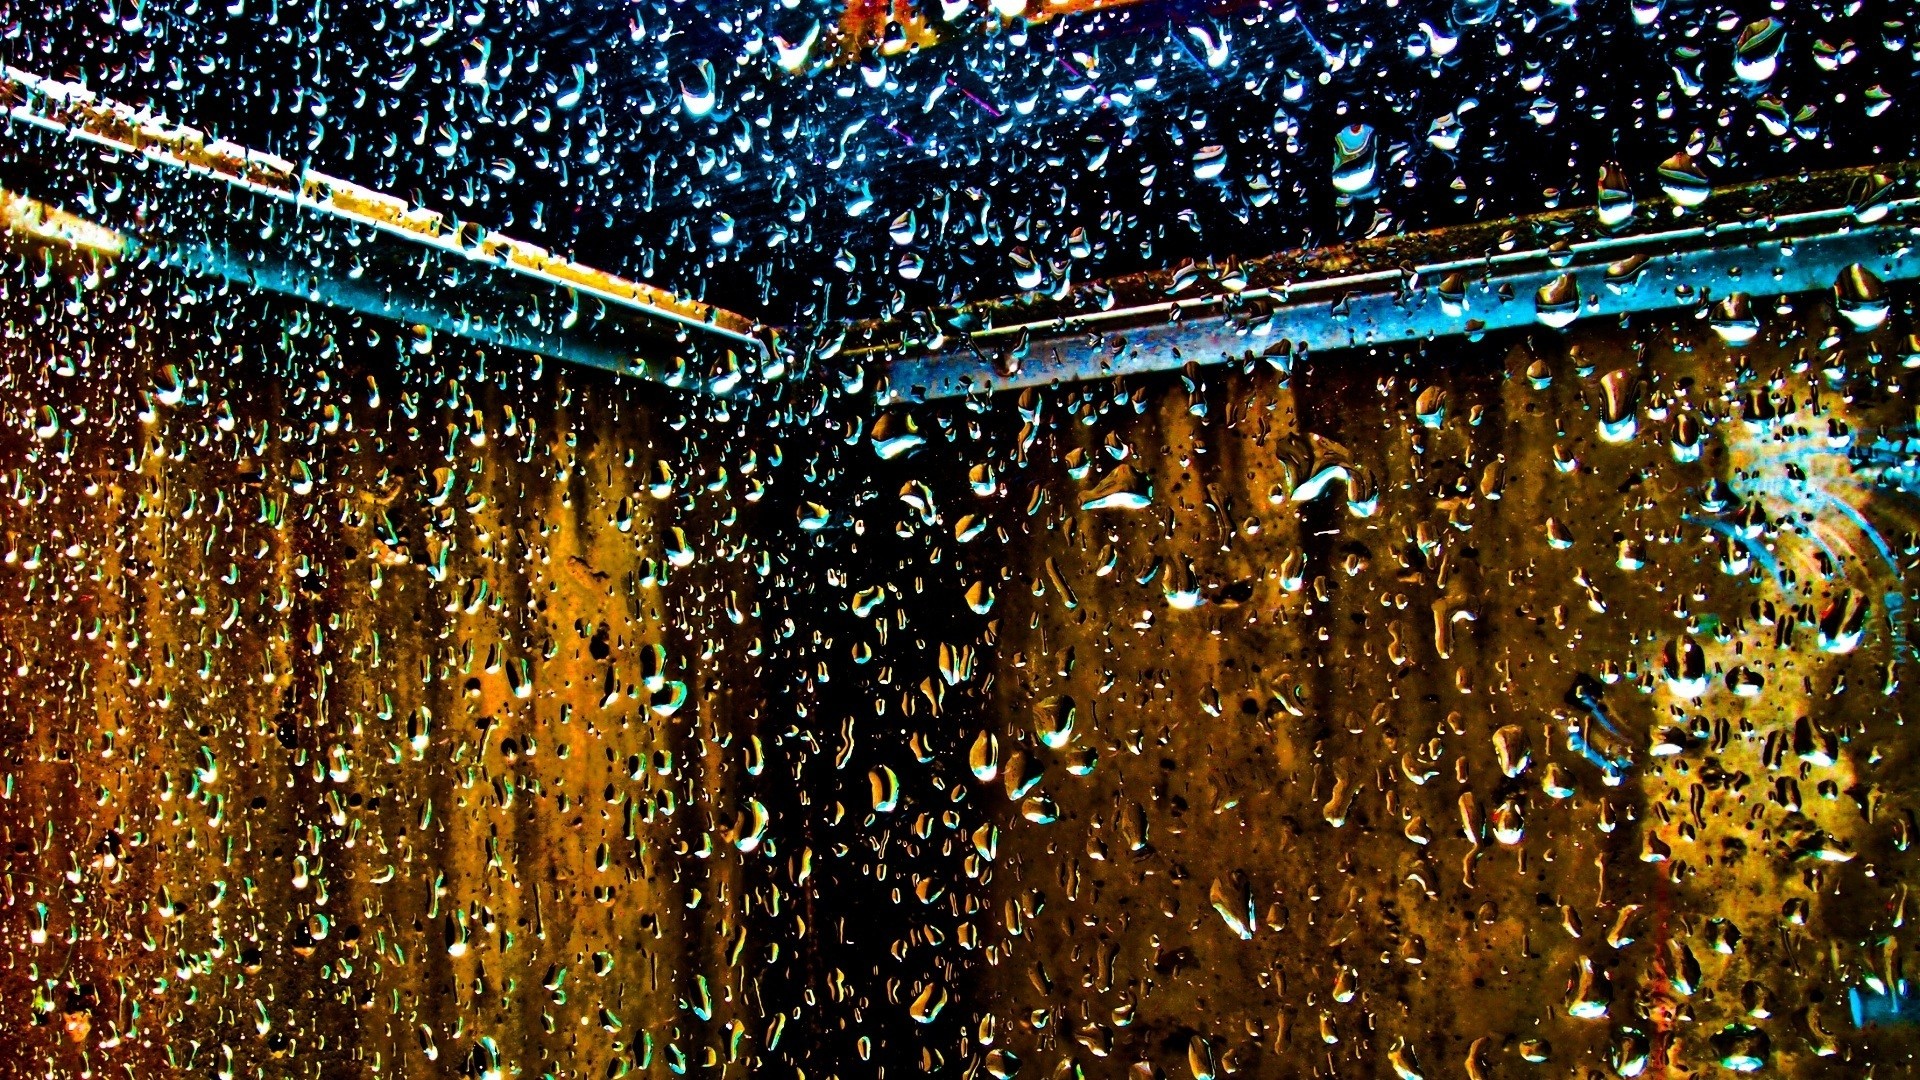 1920x1080 Water droplets window panes glass drop drops wallpaper |  | 85518  | WallpaperUP